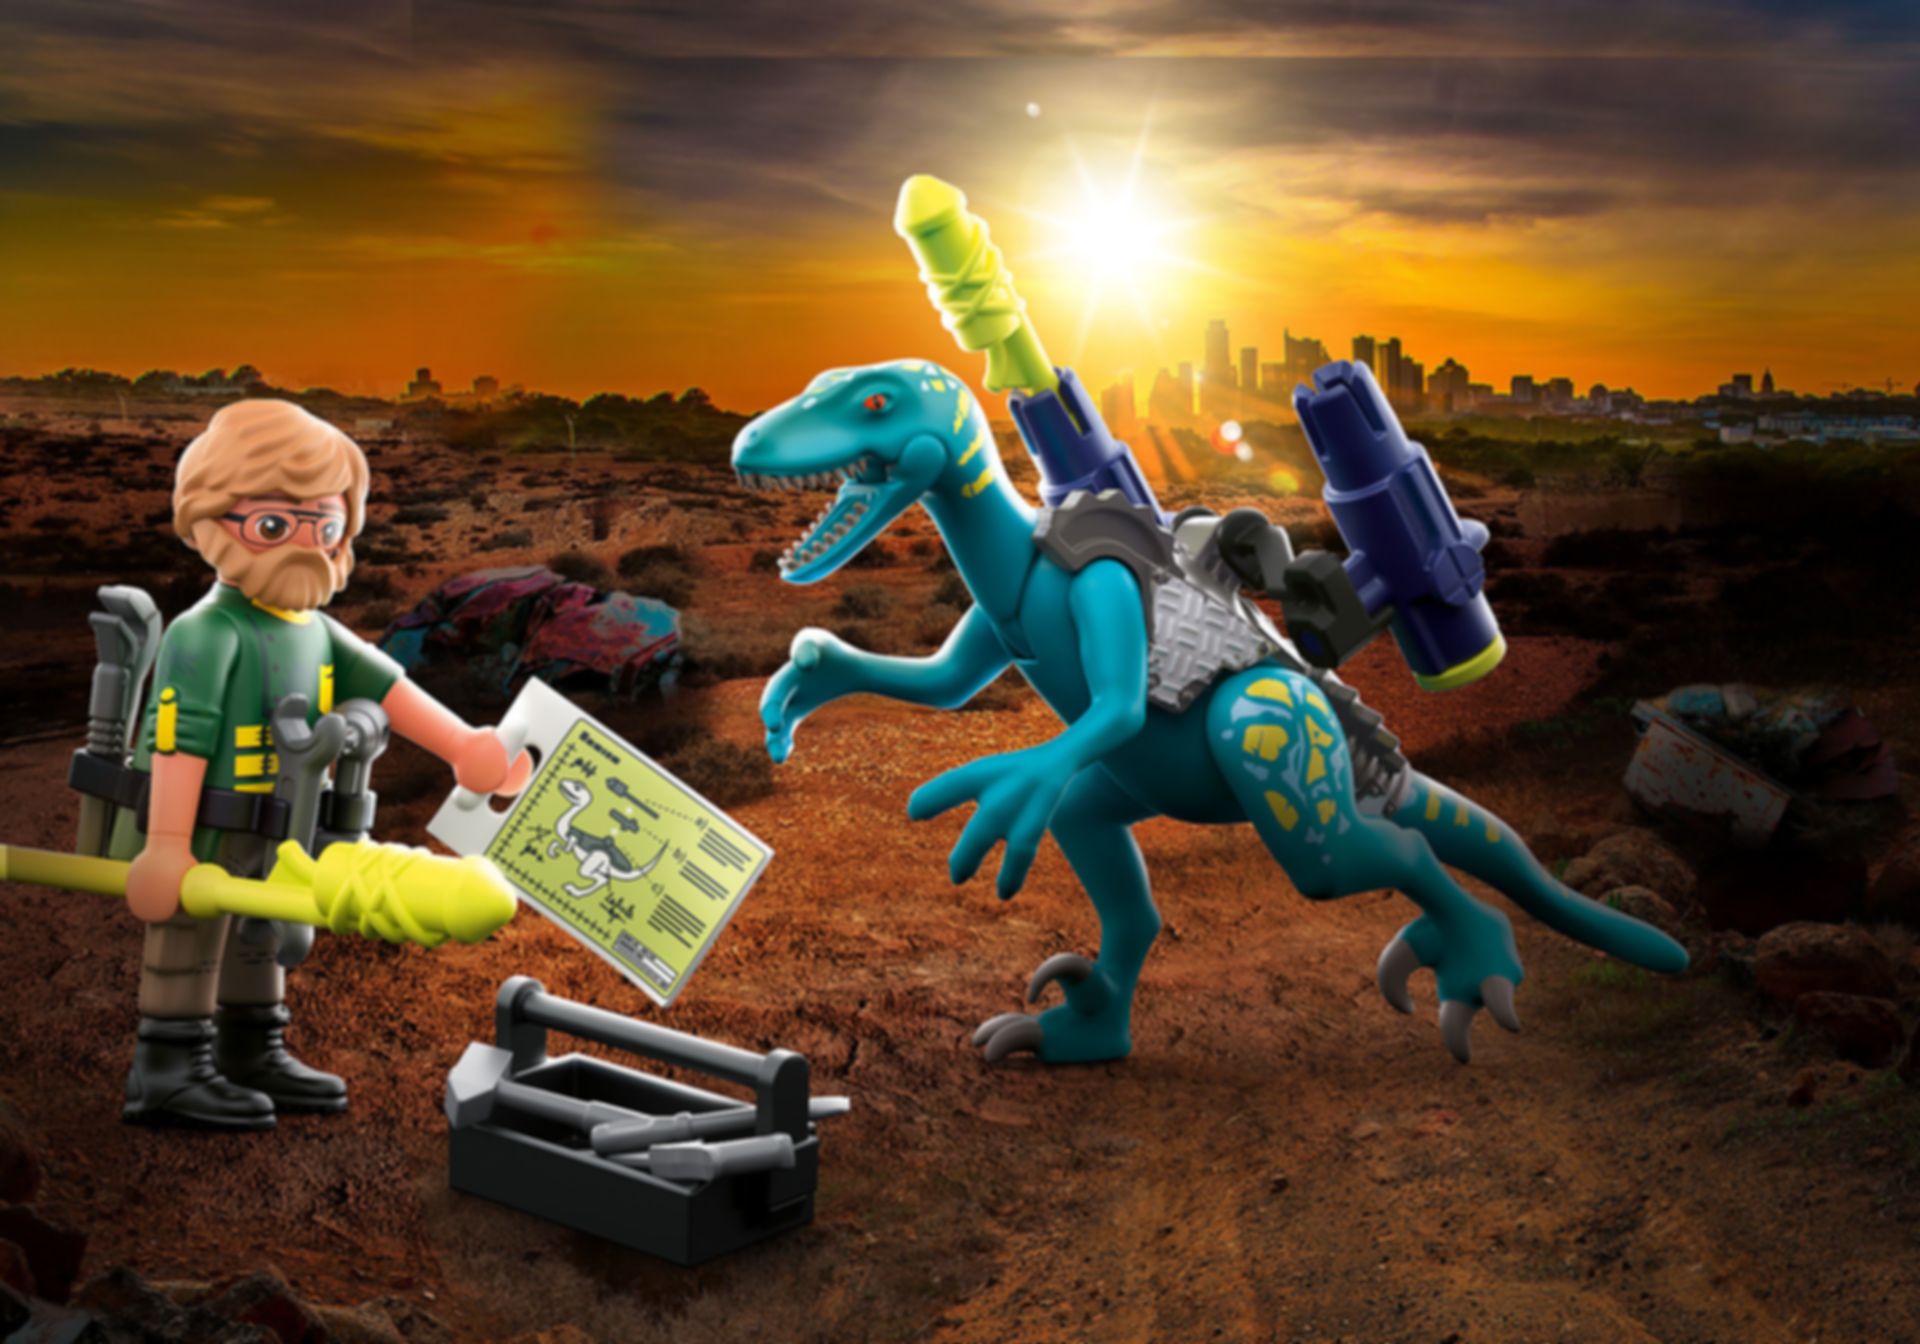 Playmobil® Dino Rise Deinonychus: Ready for Battle